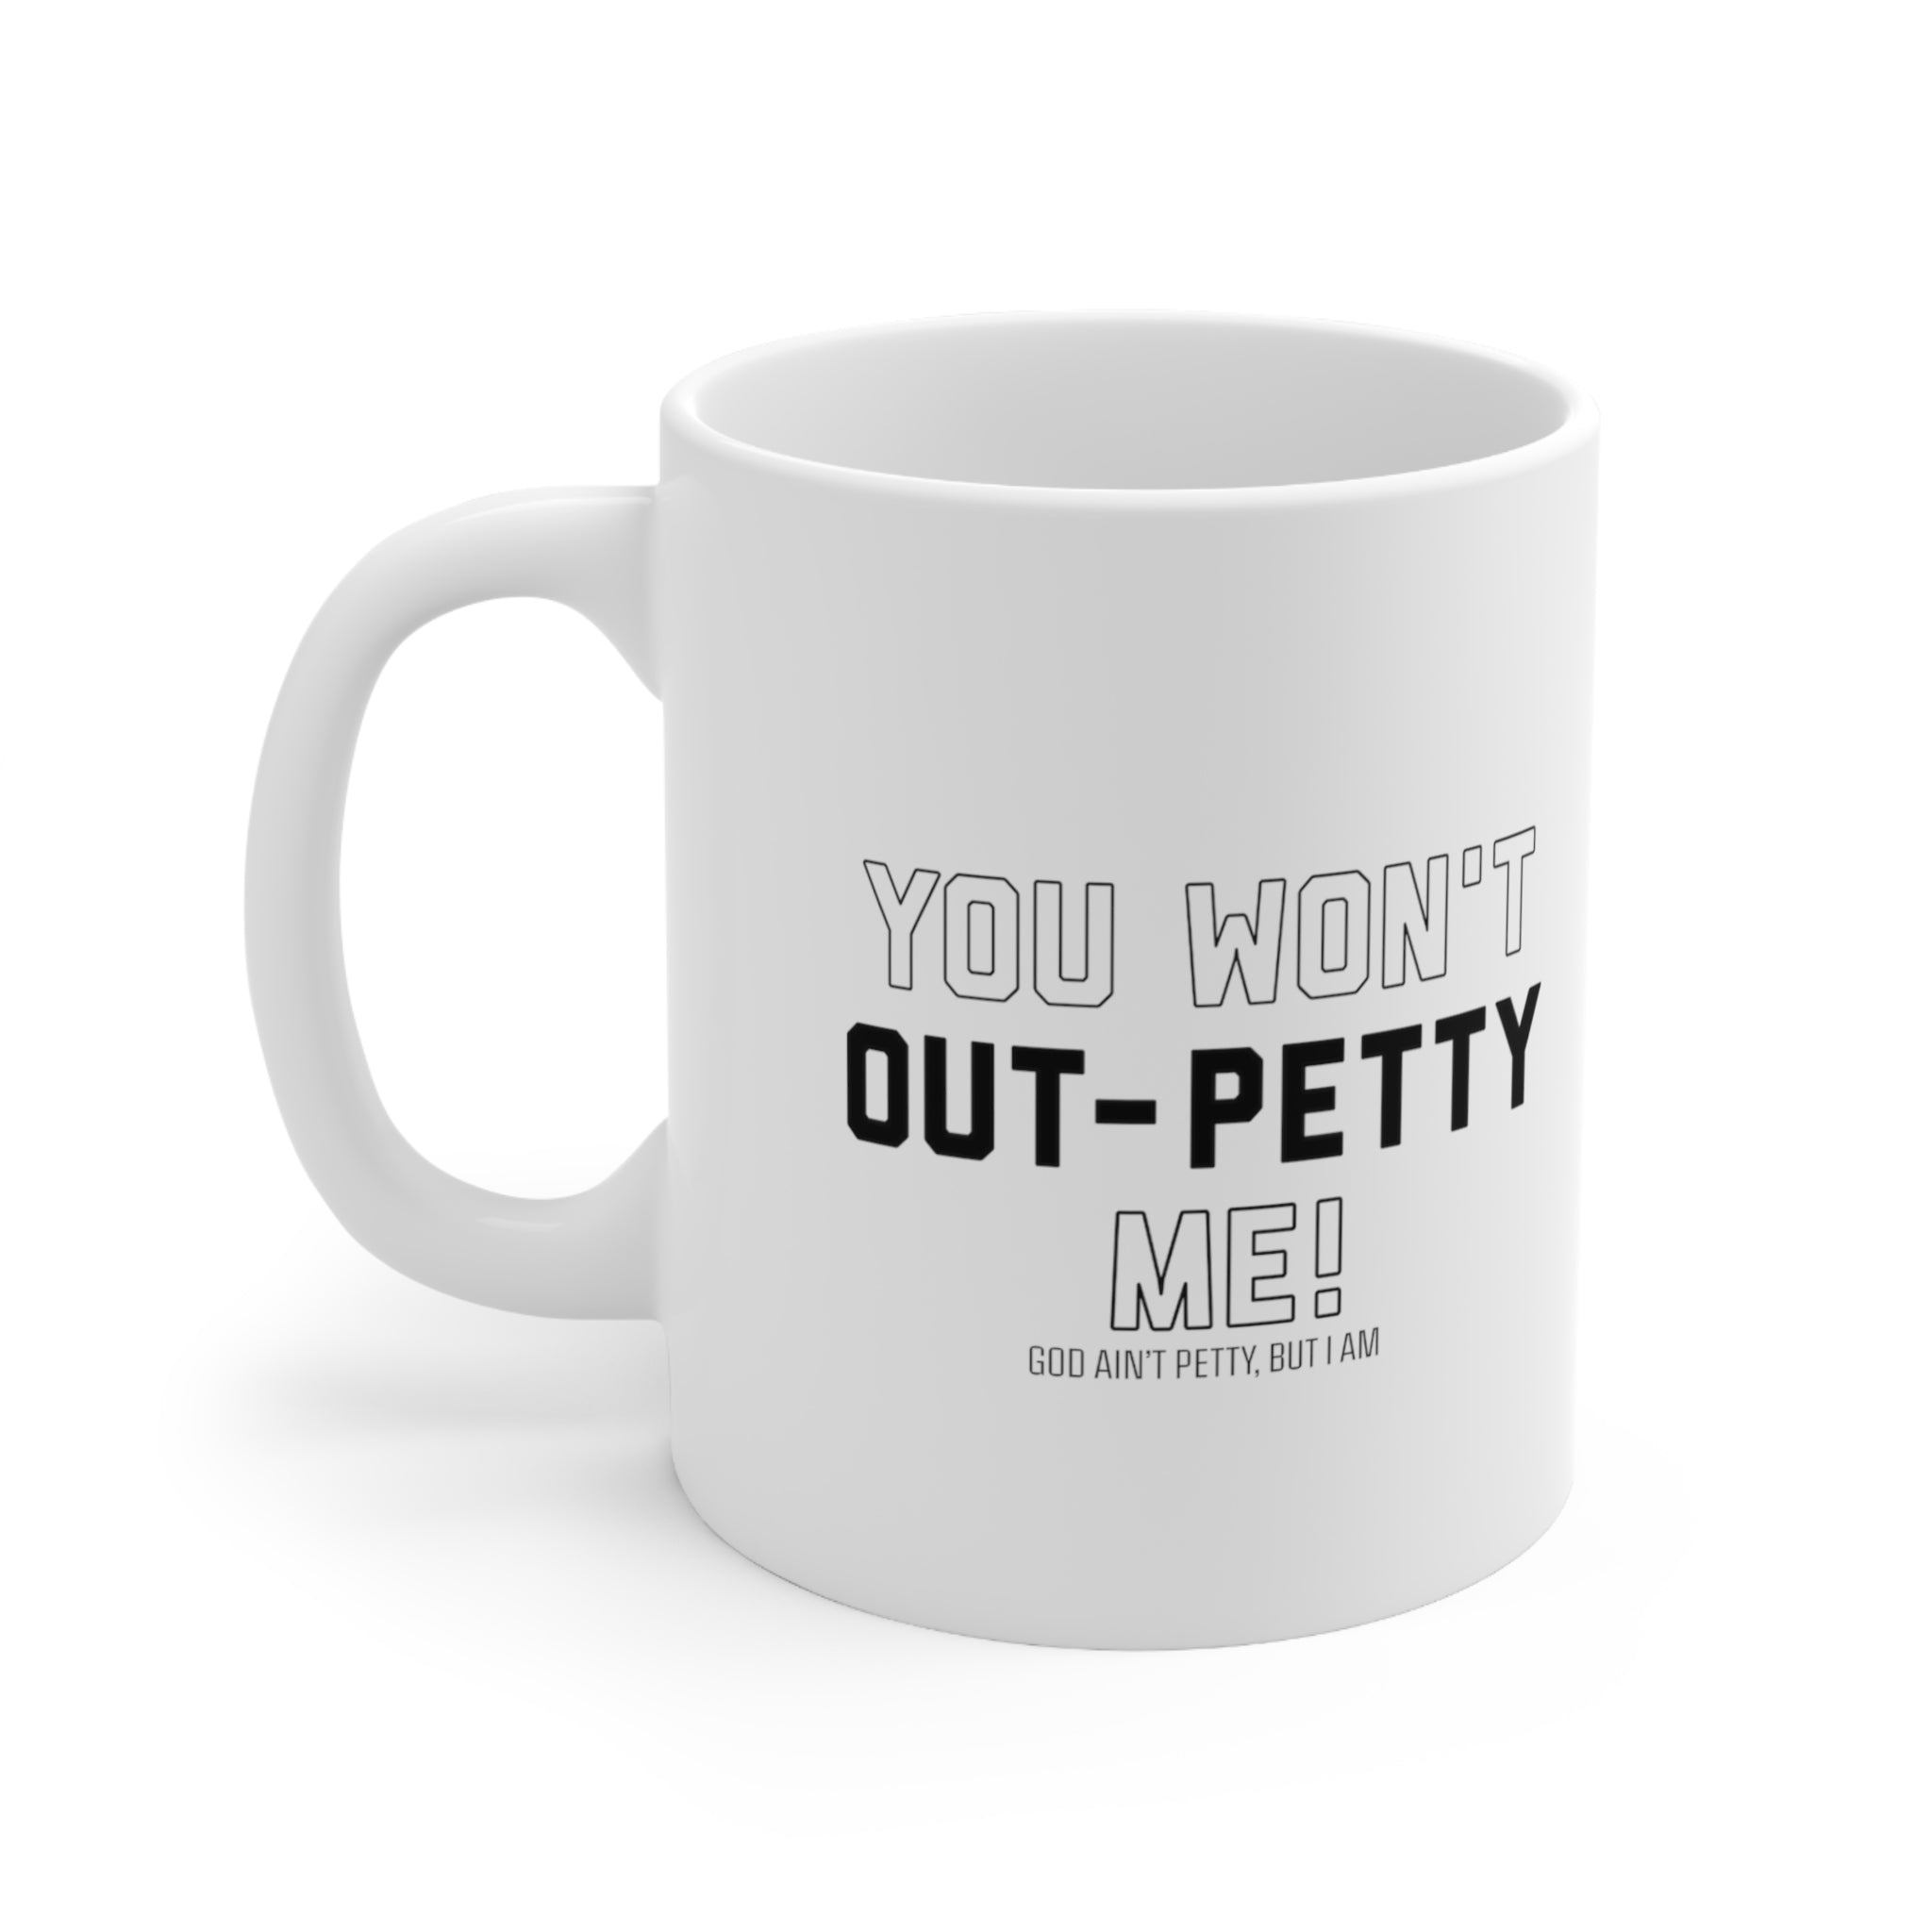 You won't out-petty me Mug 11oz (White/Black)-Mug-The Original God Ain't Petty But I Am